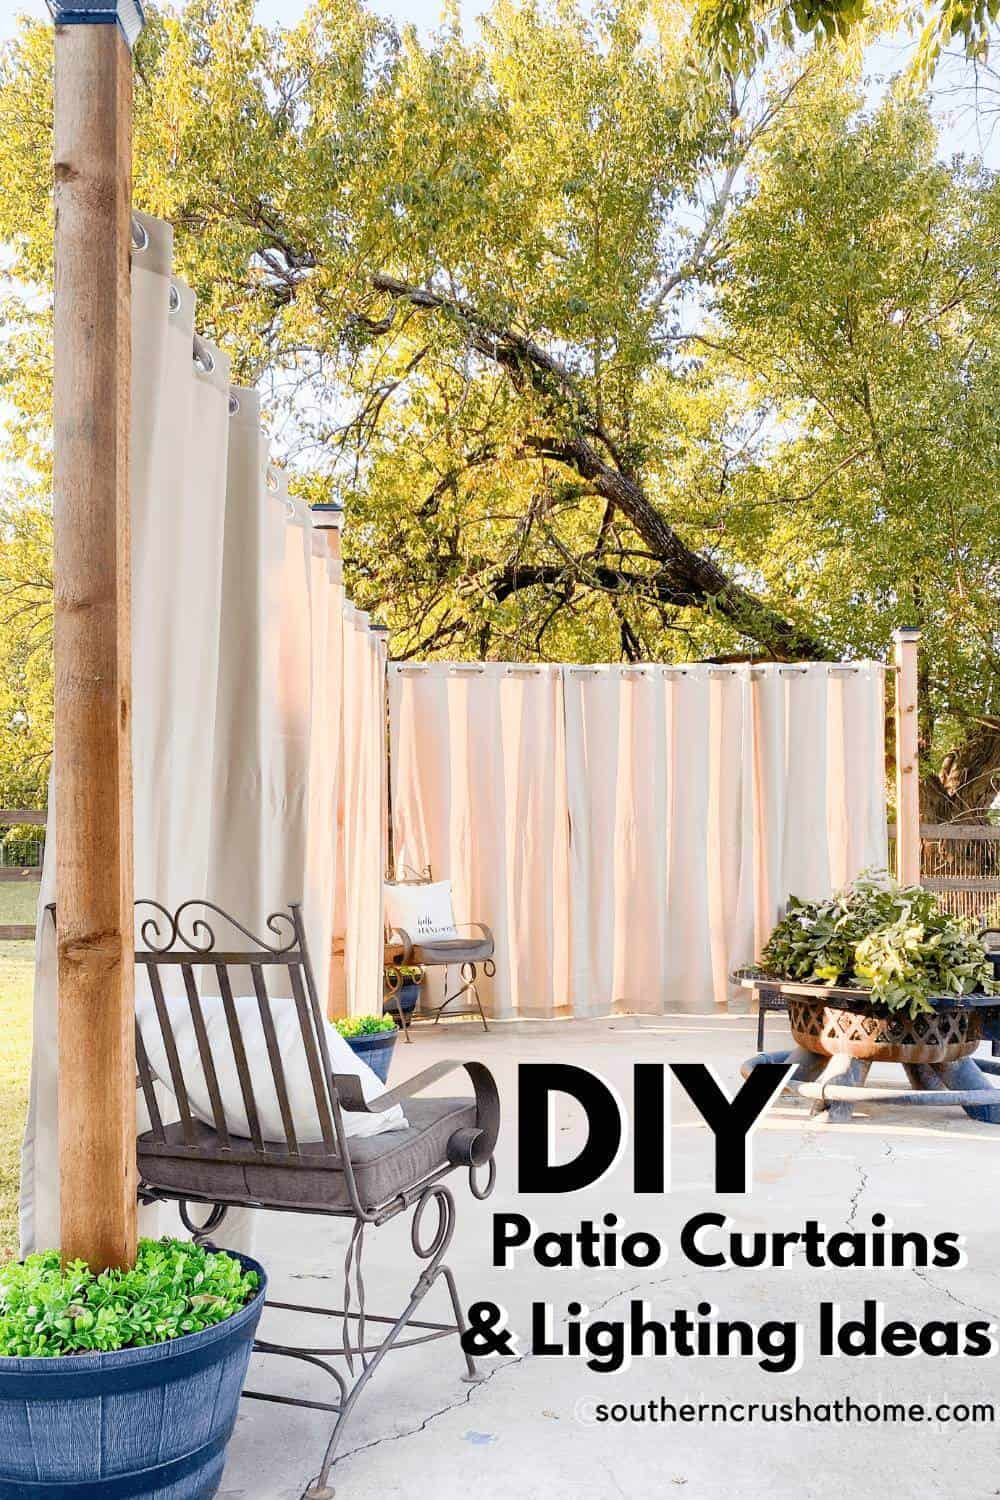 Creative Outdoor Patio Lighting & Curtains DIY + Patio String